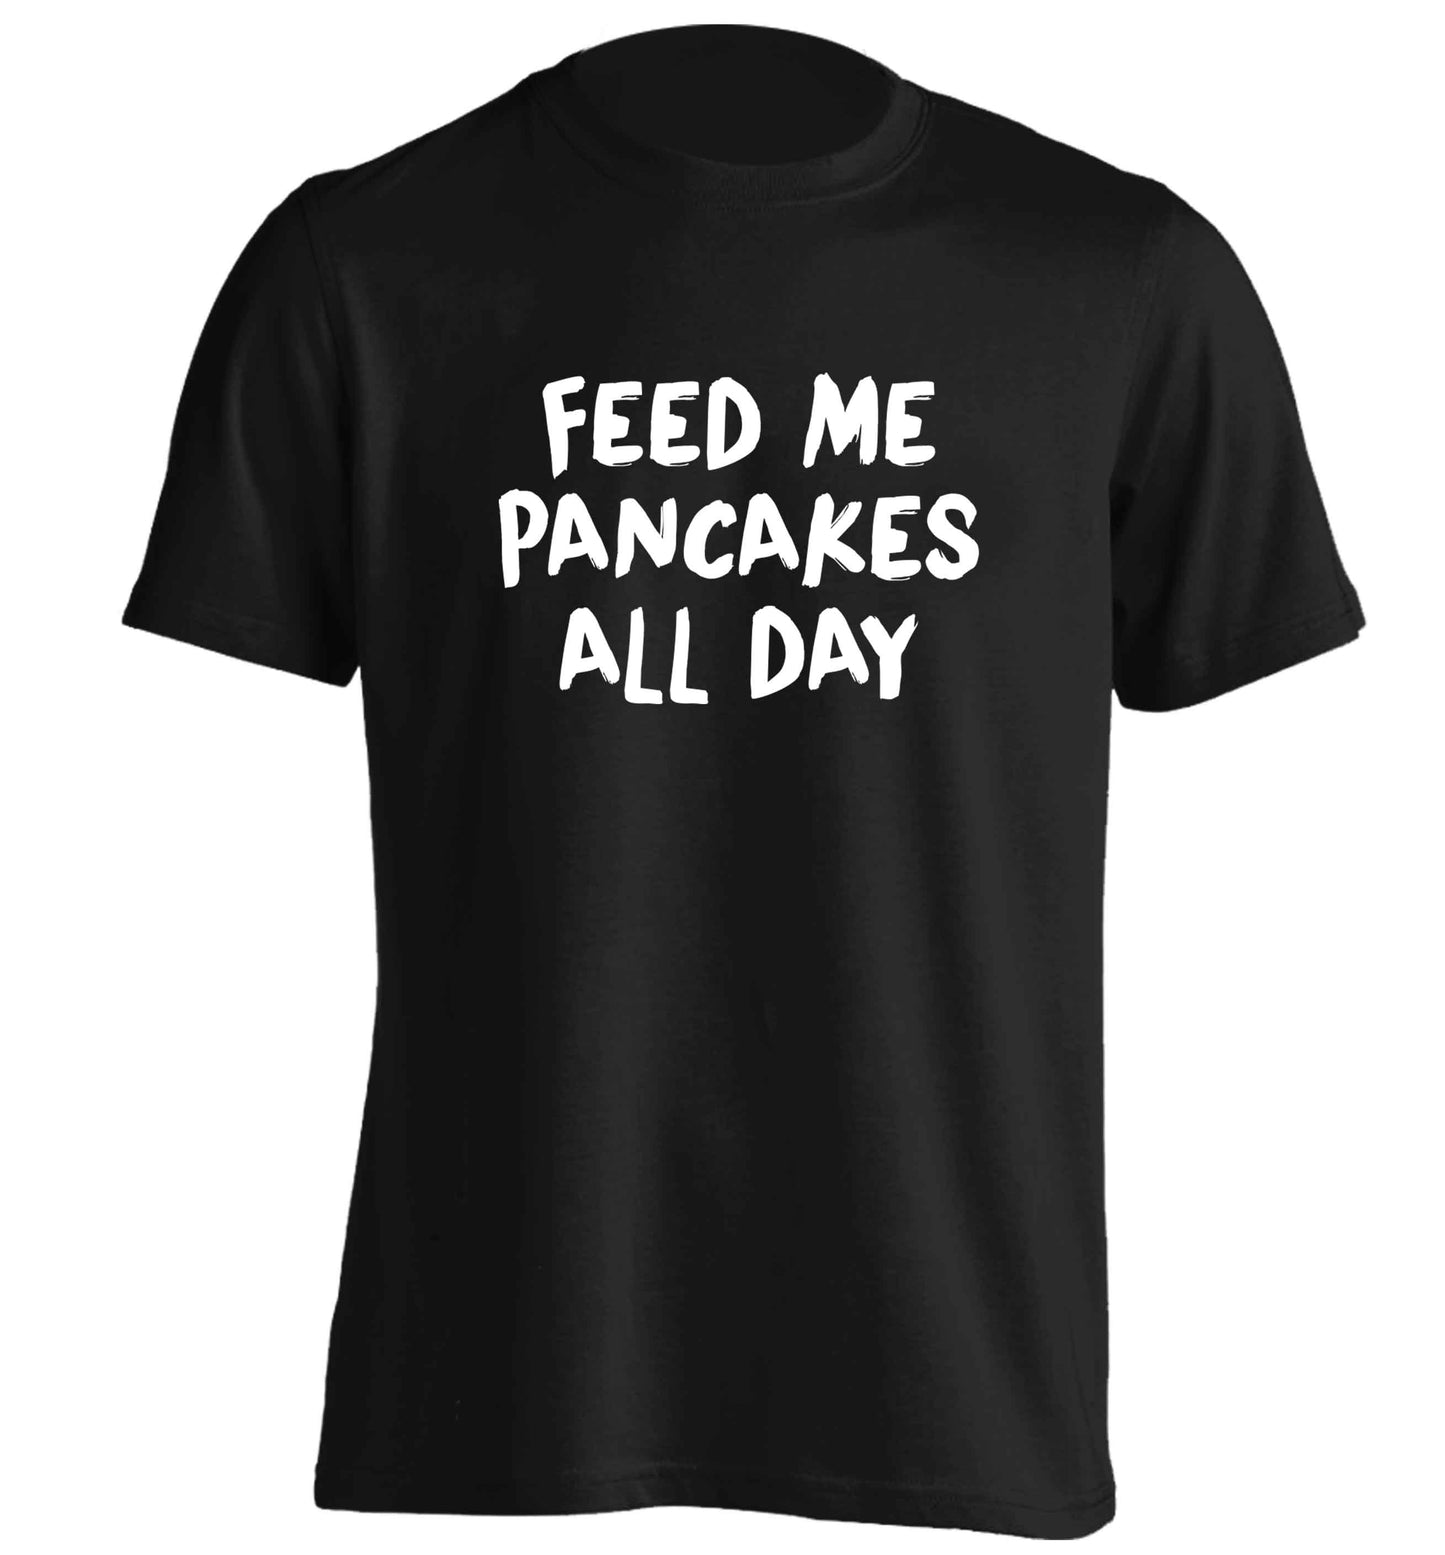 Feed me pancakes all day adults unisex black Tshirt 2XL